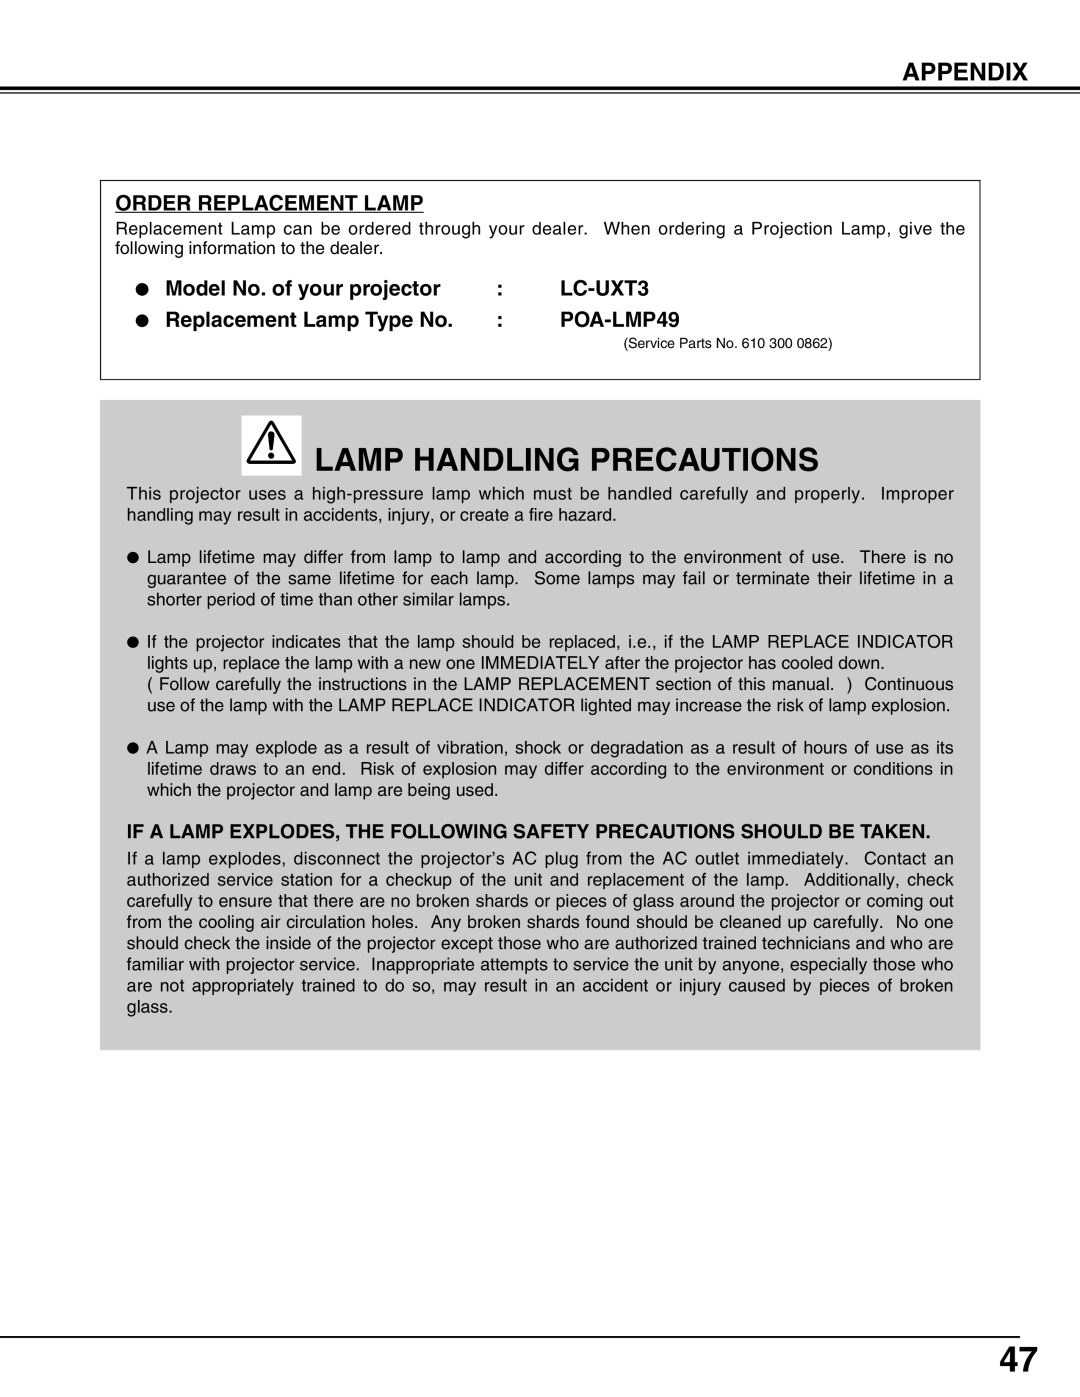 Eiki LC-UXT3 Lamp Handling Precautions, Appendix, Order Replacement Lamp, Model No. of your projector, POA-LMP49 